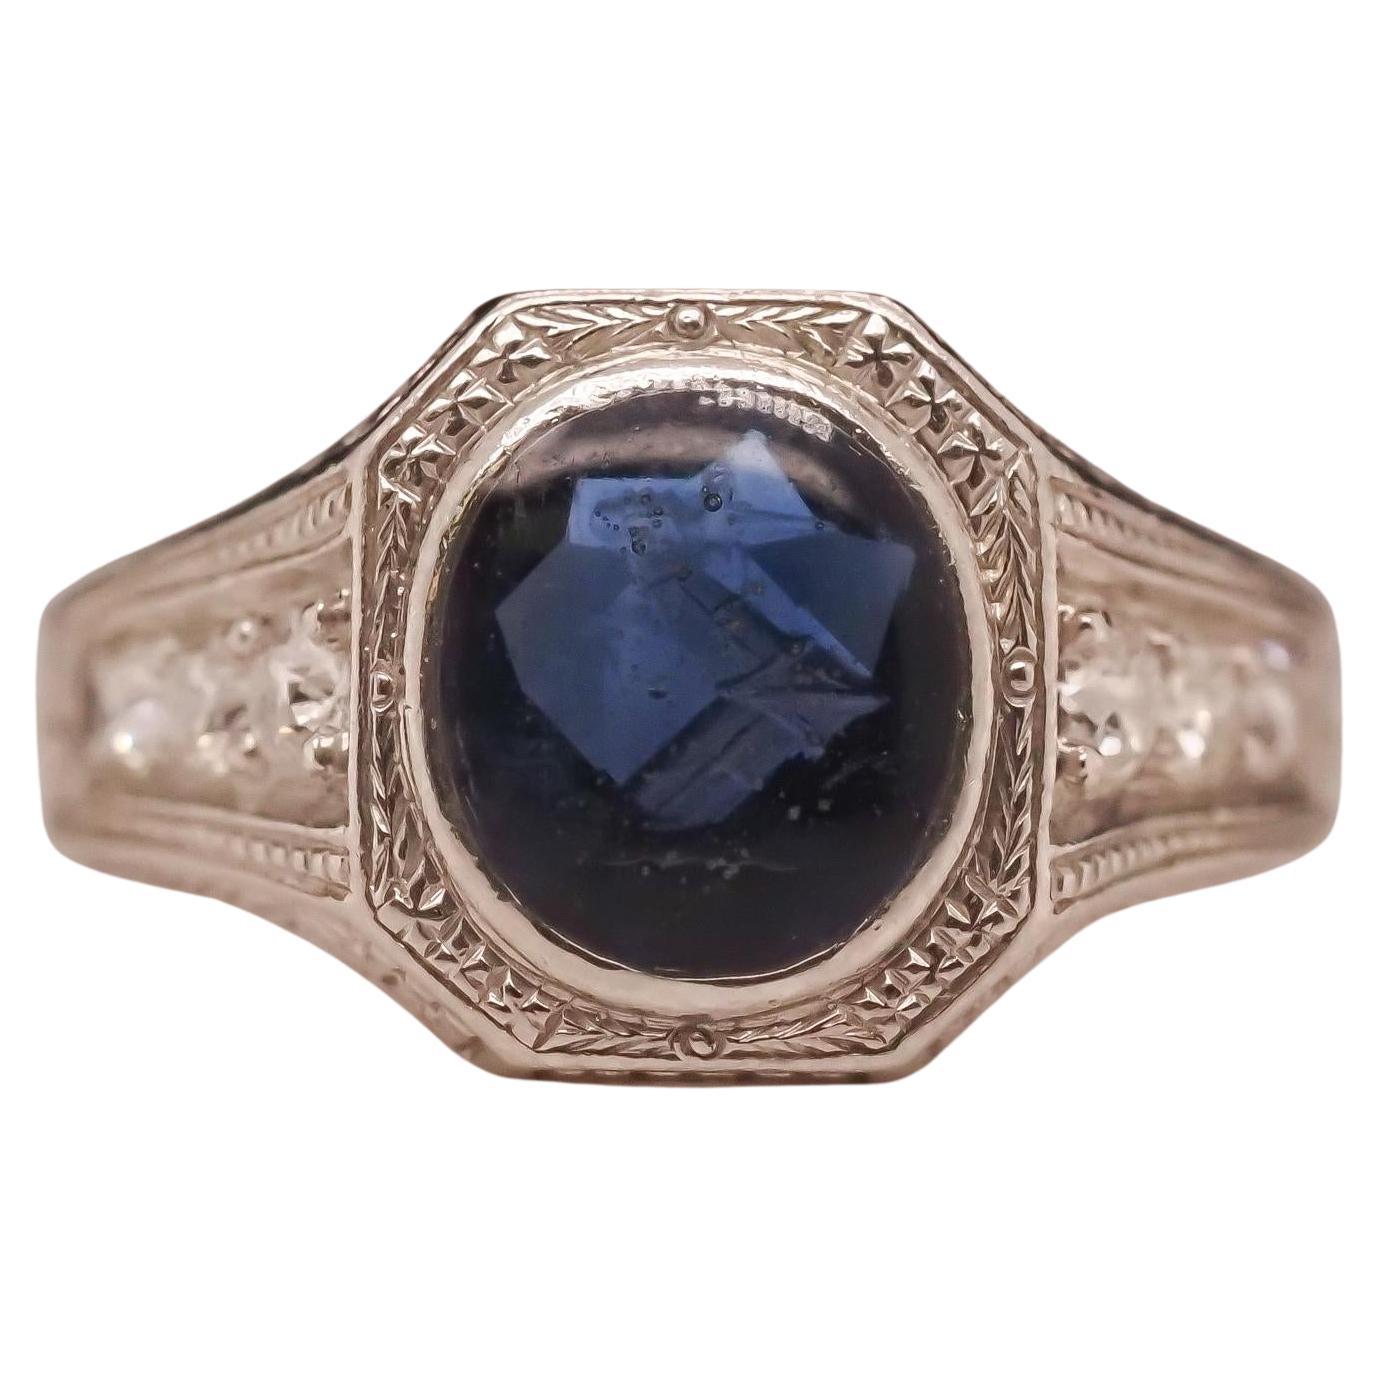 Circa 1920s Platinum Art Deco Sapphire and Diamond Ring